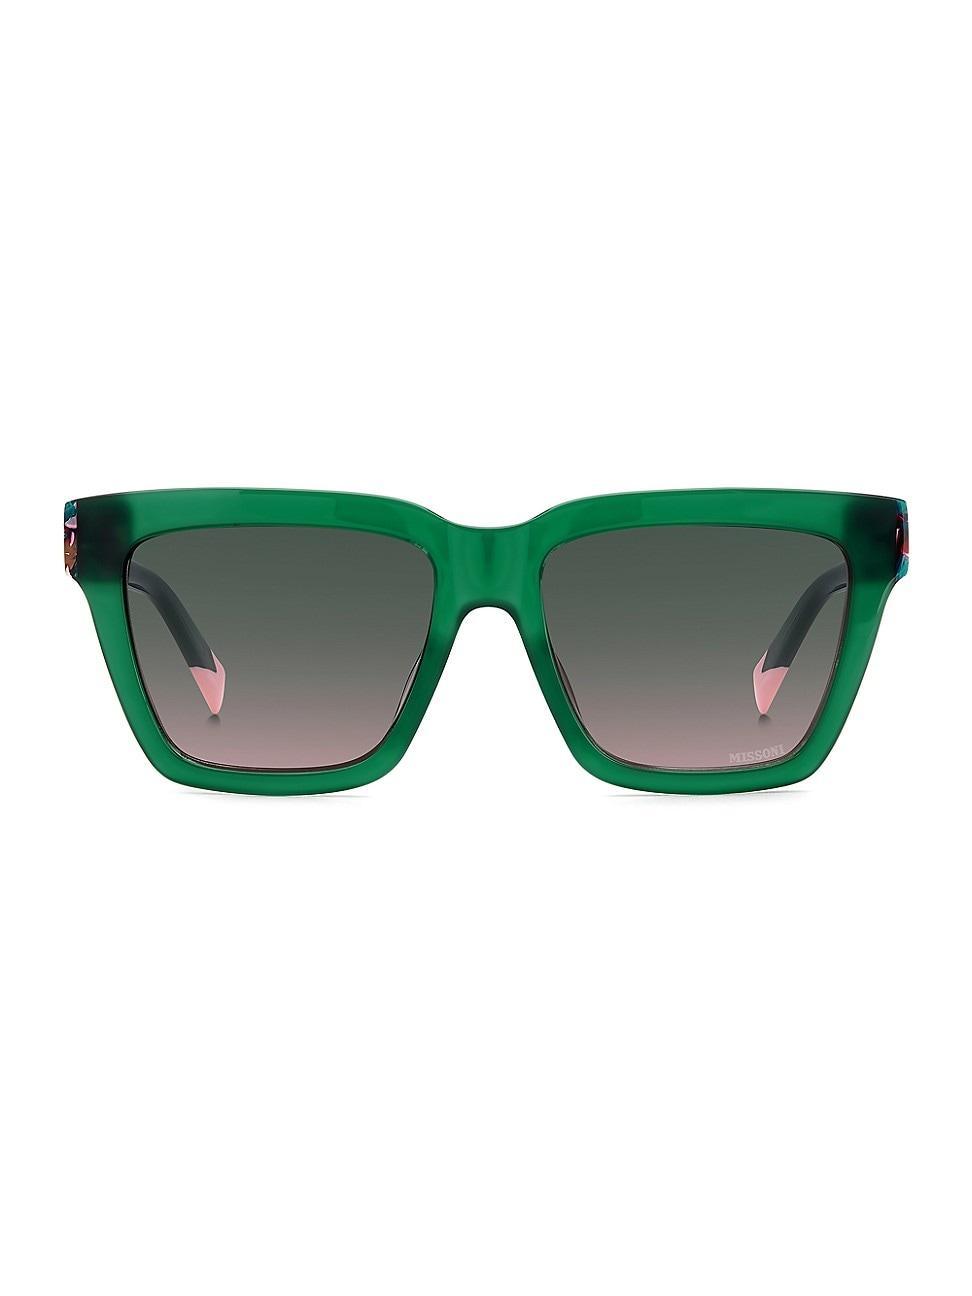 Missoni 55mm Rectangular Sunglasses Product Image